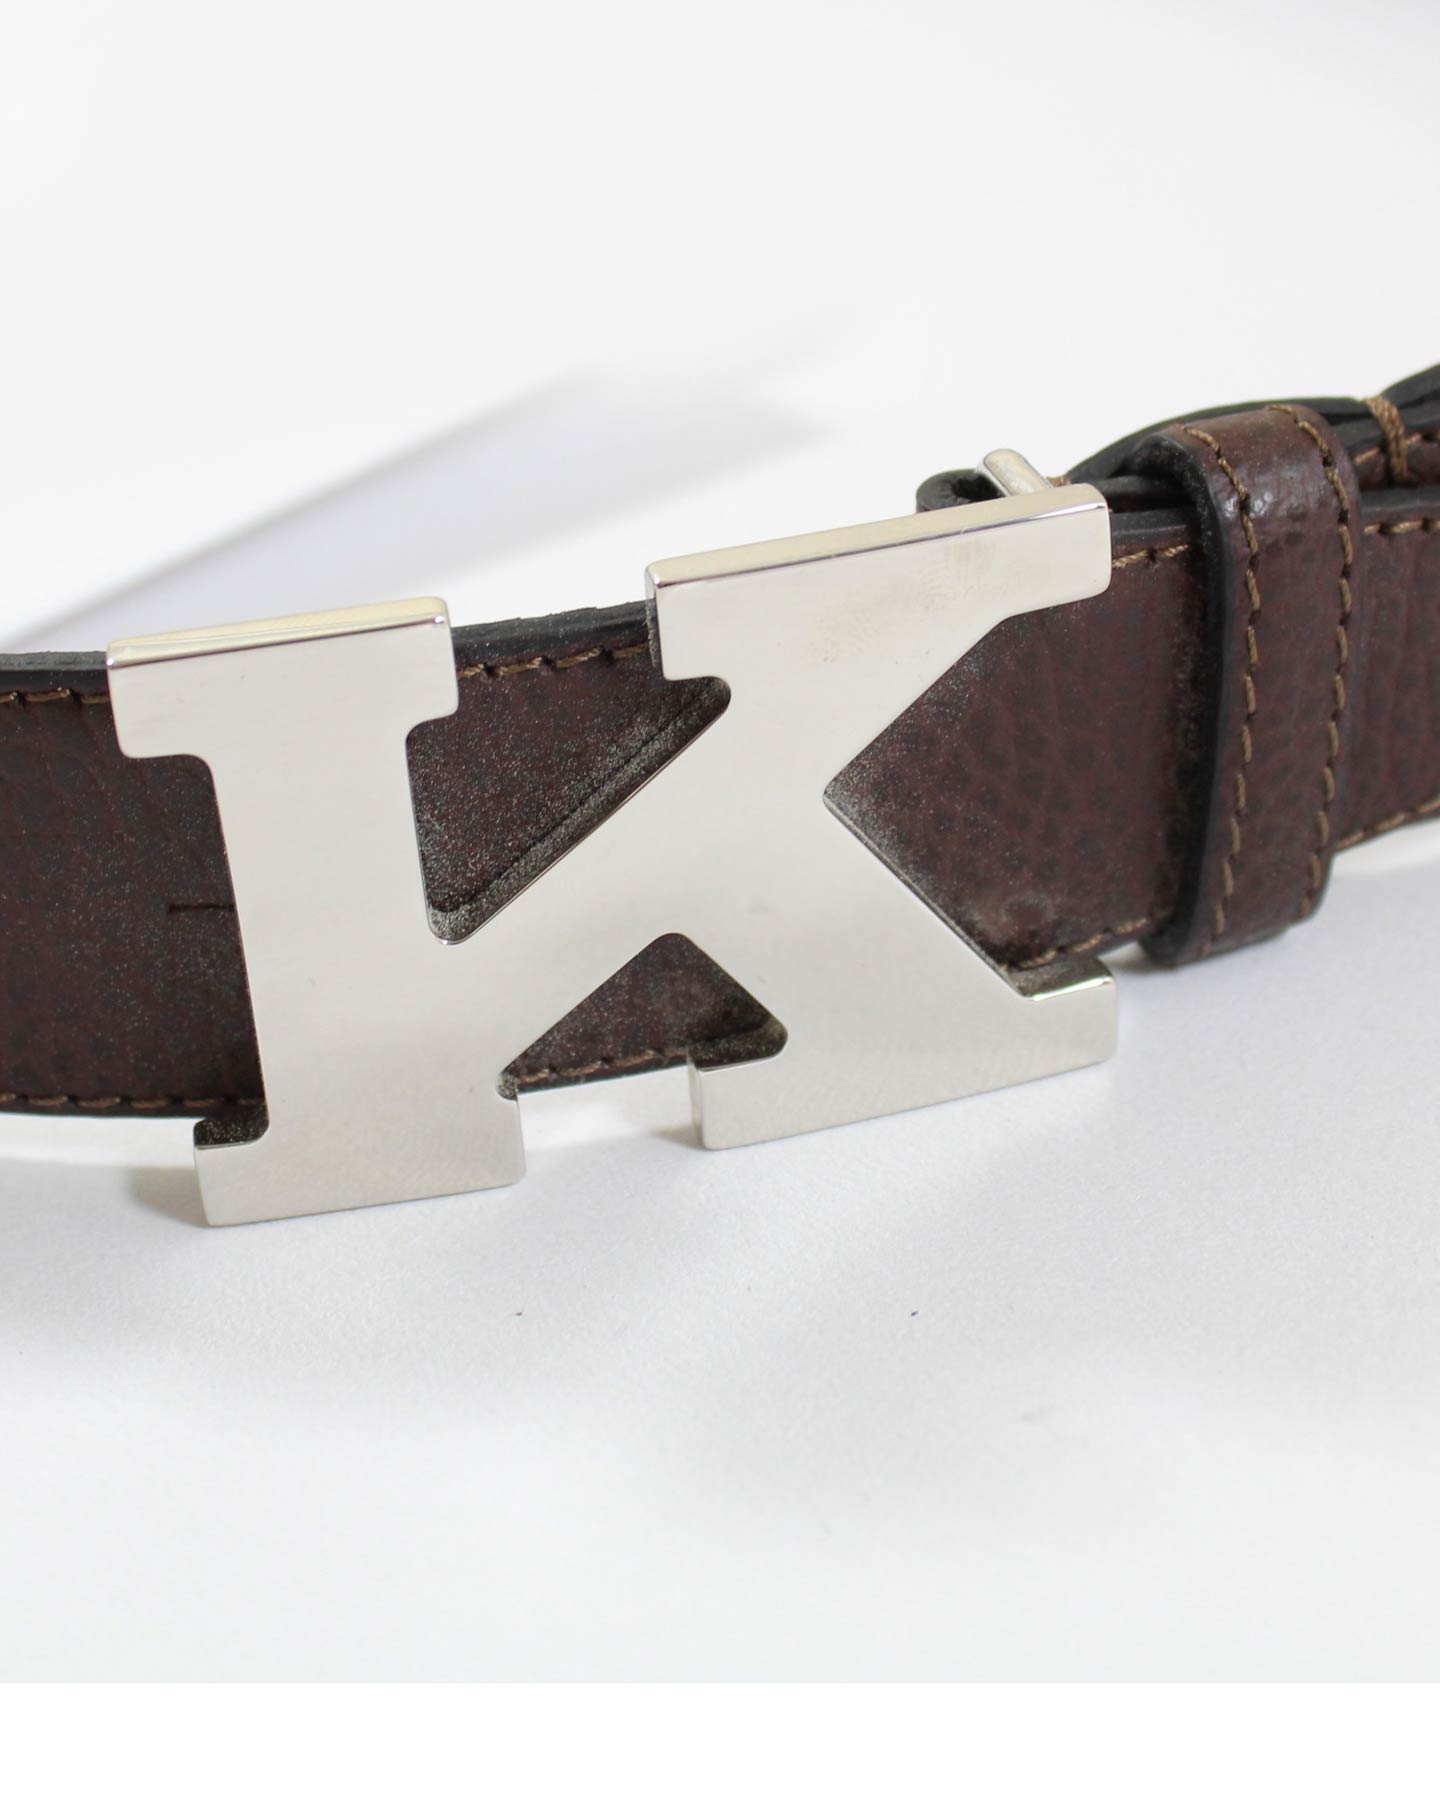 Kiton Belt K Logo Leather Size 42 US Adjustable Length Green Camo 01BT0105